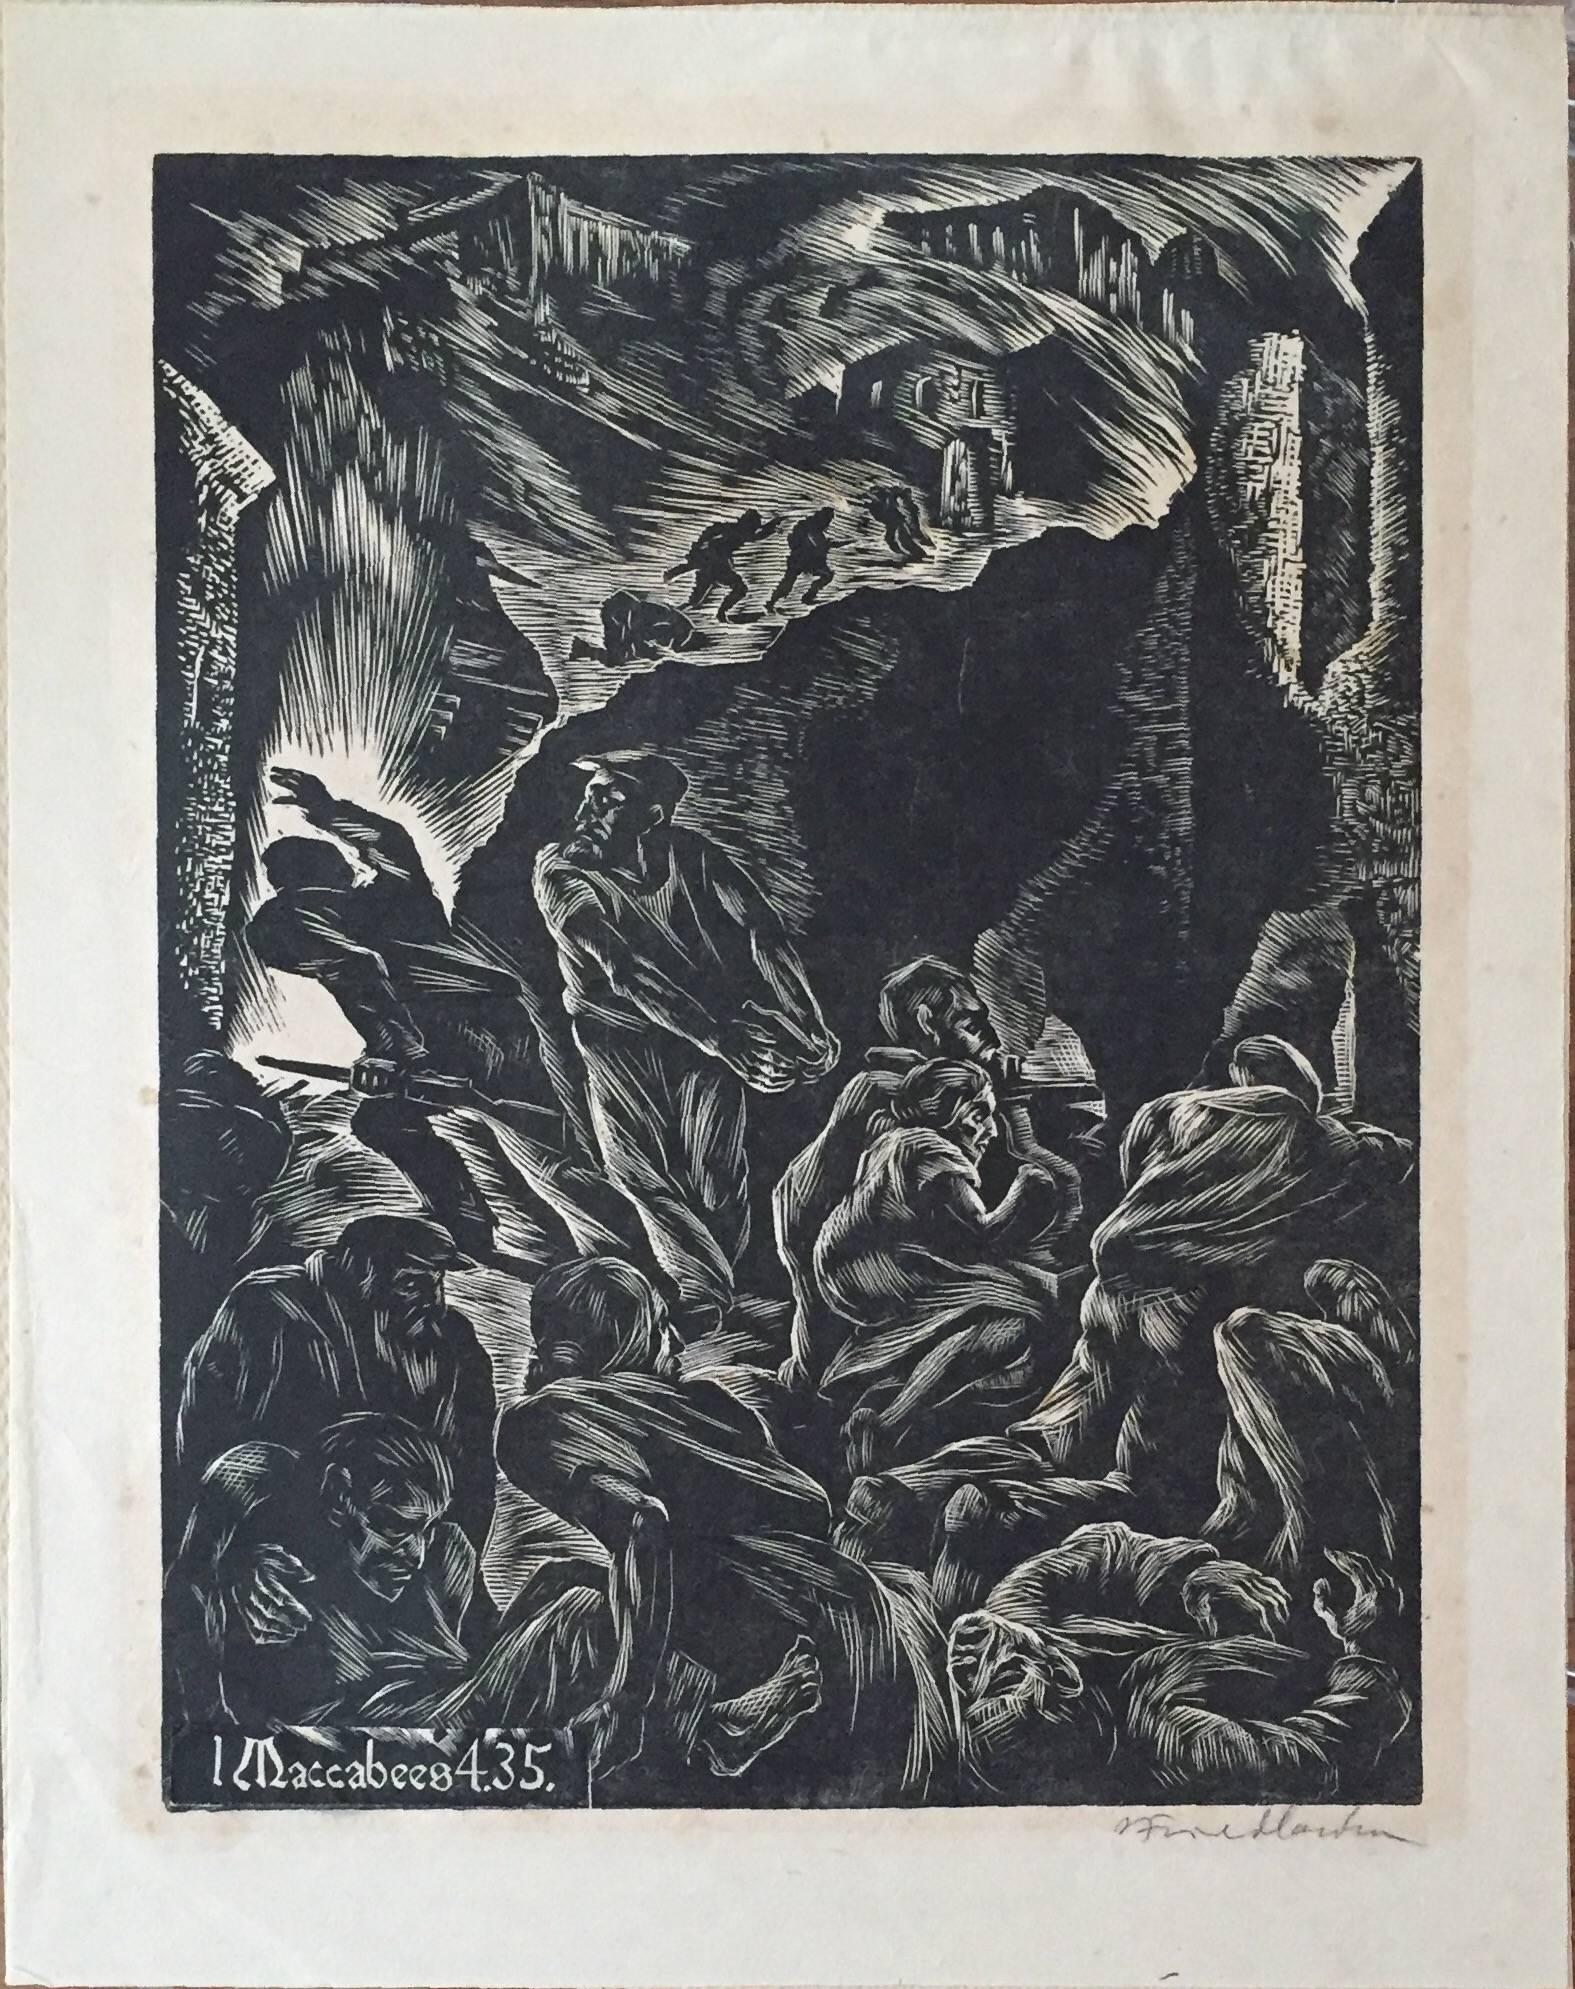 Albert Abramovitz Figurative Print – Makaken 4.35.